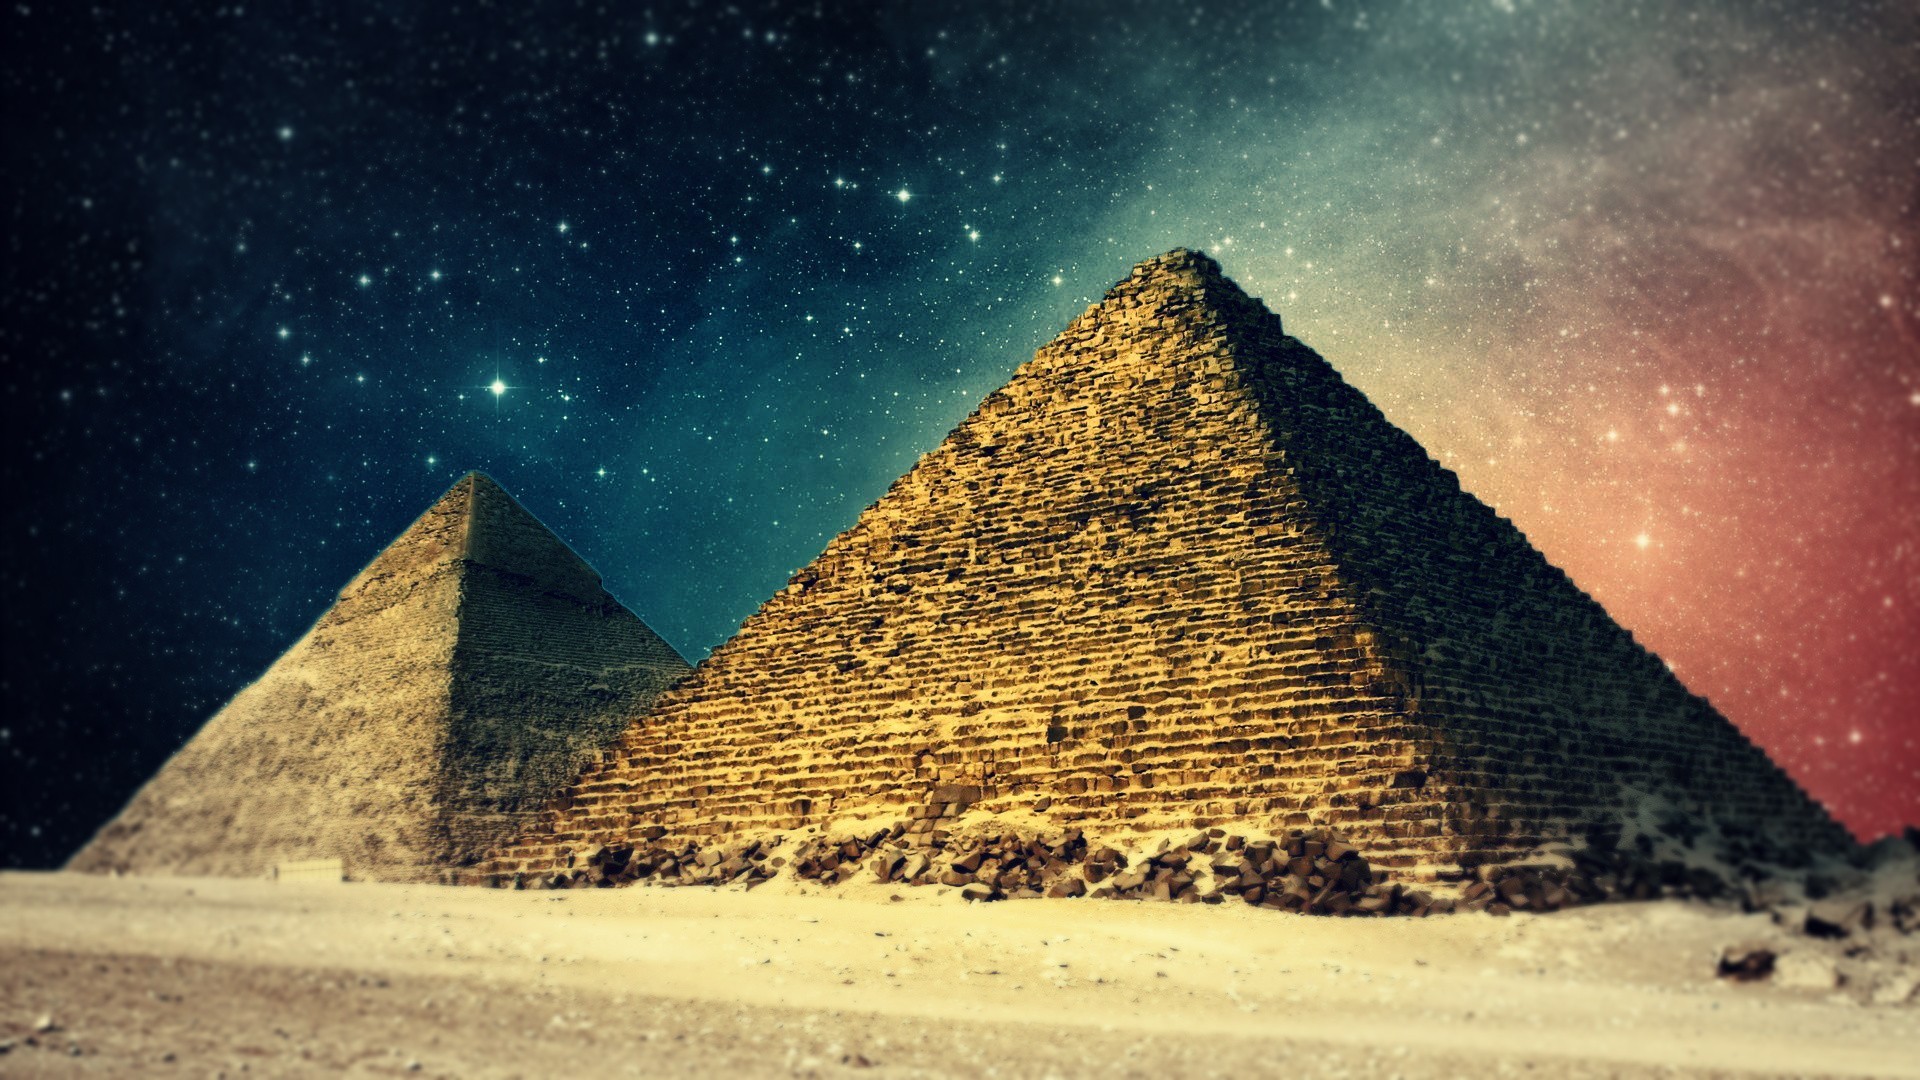 General 1920x1080 pyramid stars desert sky Egypt Pyramids of Giza landmark Africa World Heritage Site